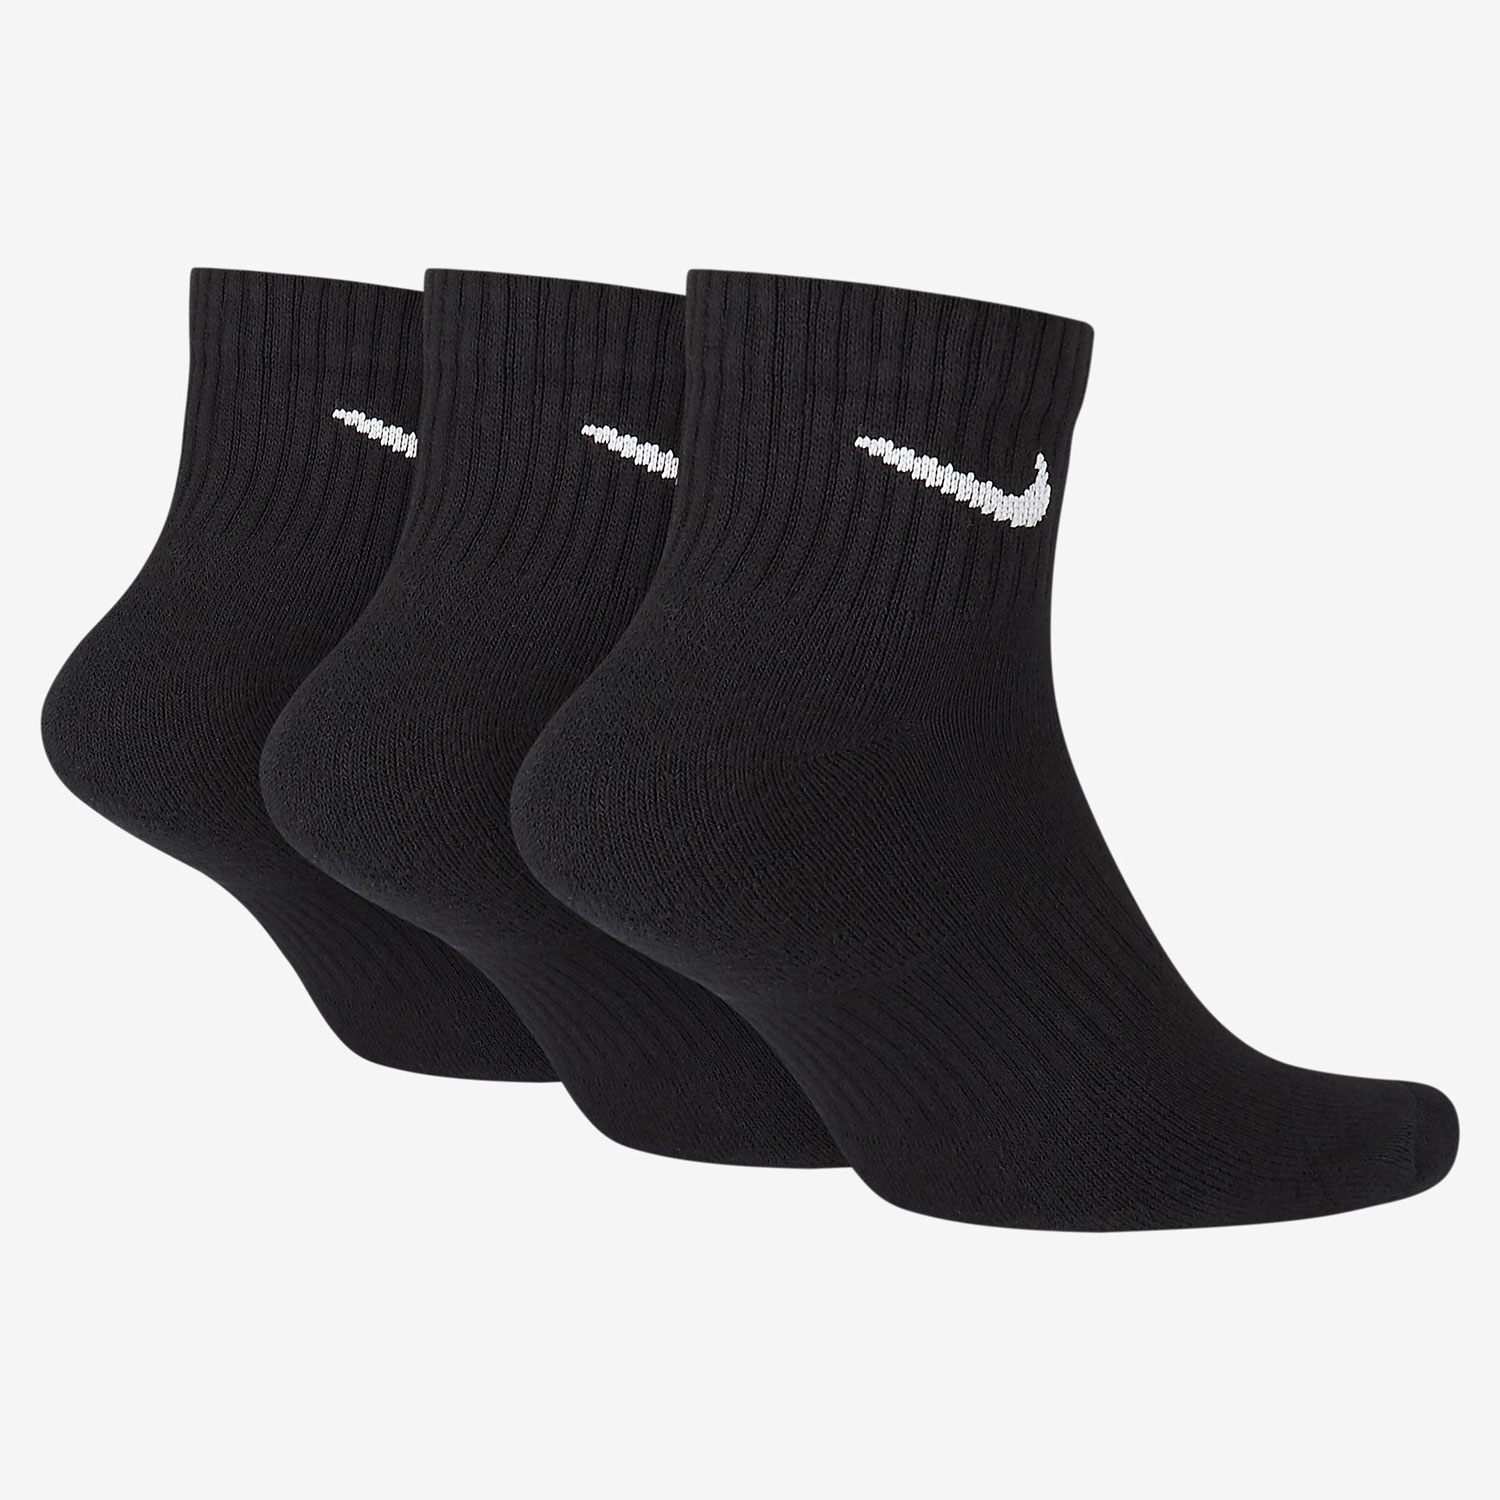 Nike Everyday Cushion x 3 Socks - Black